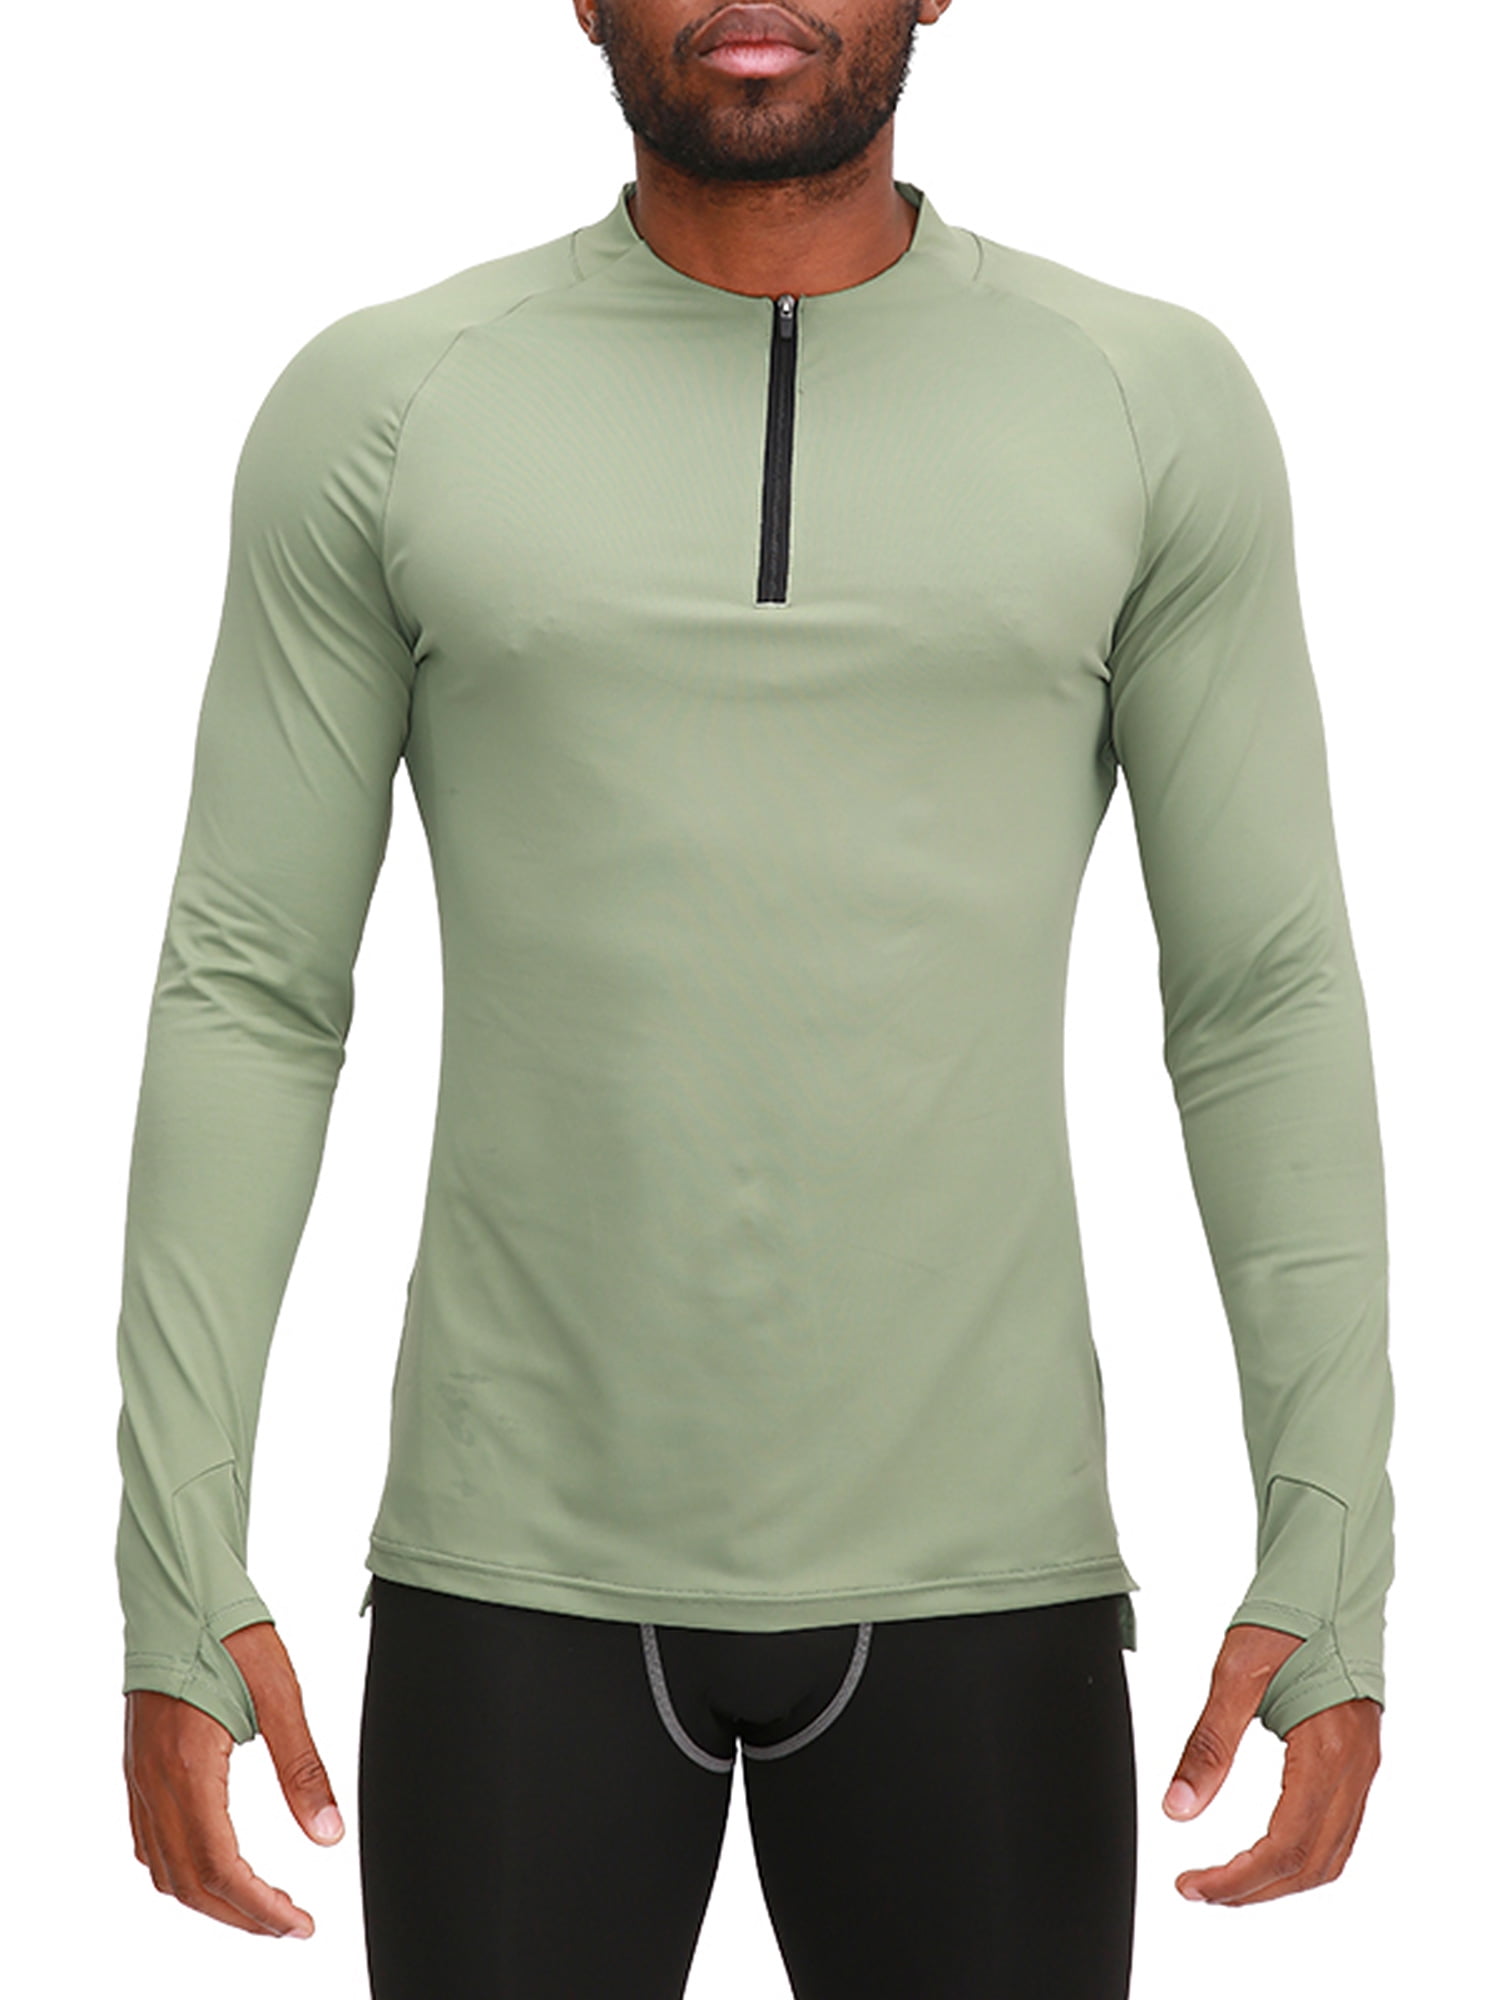 Mens Compression Shirt Gym Running Basketball Mock Neck 1/4 Zip Top Short Sleeve 